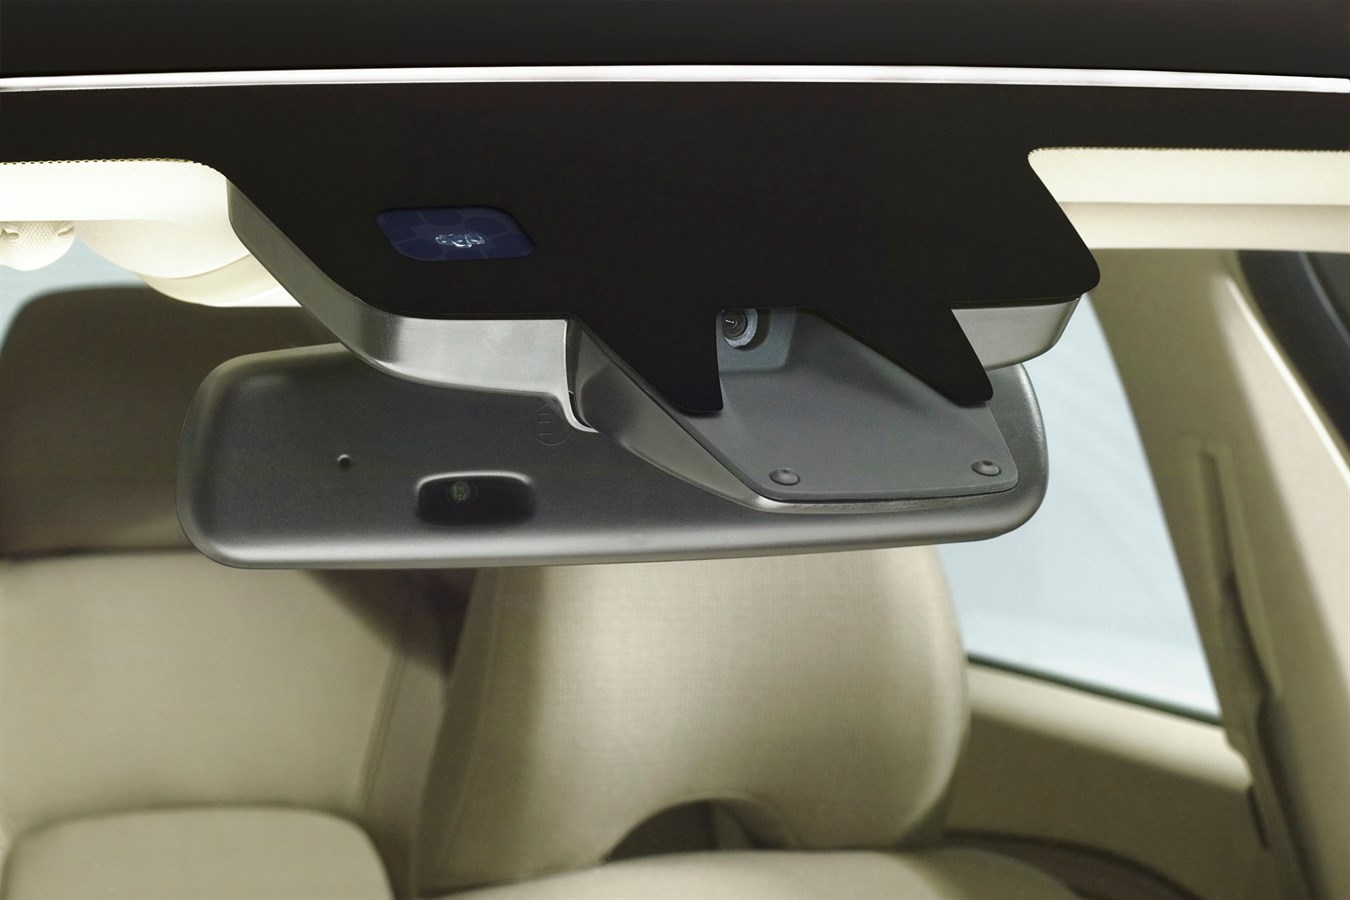 Camera behind interior rear-view mirror - Volvo Cars Global Media